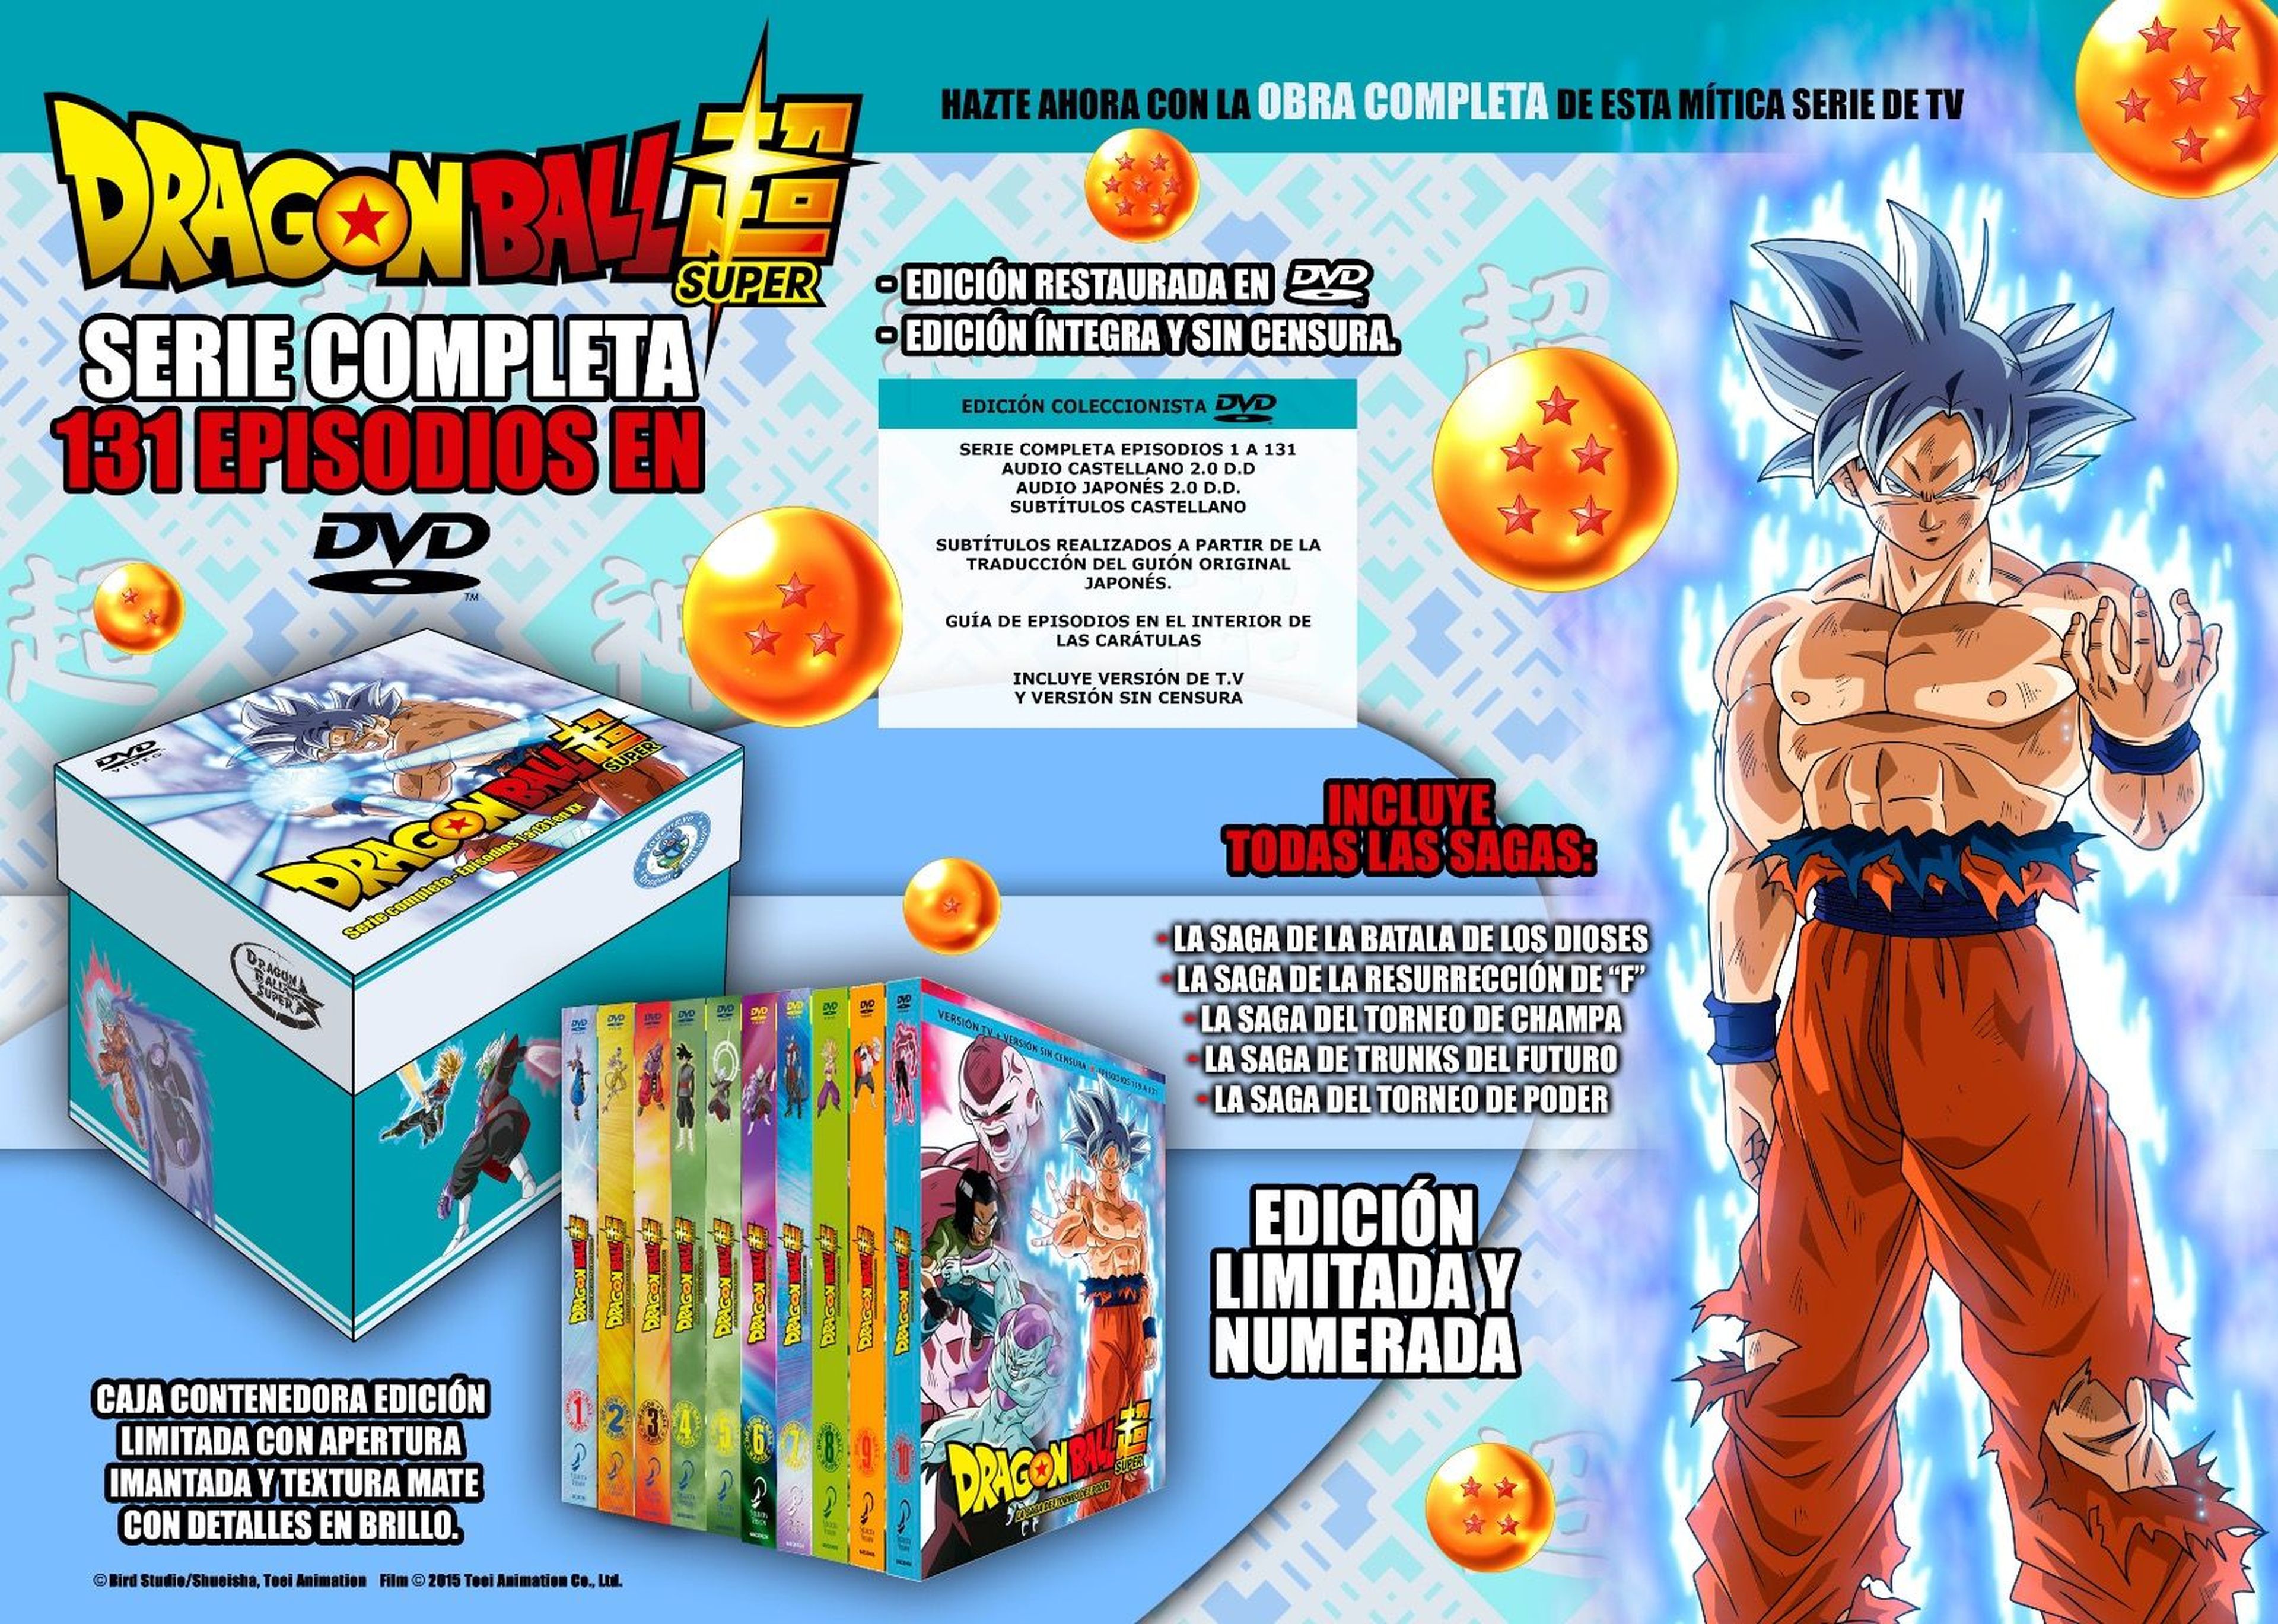 Dragon Ball Super - La serie completa se relanzará en DVD gracias a la Monster Box de Selecta Visión